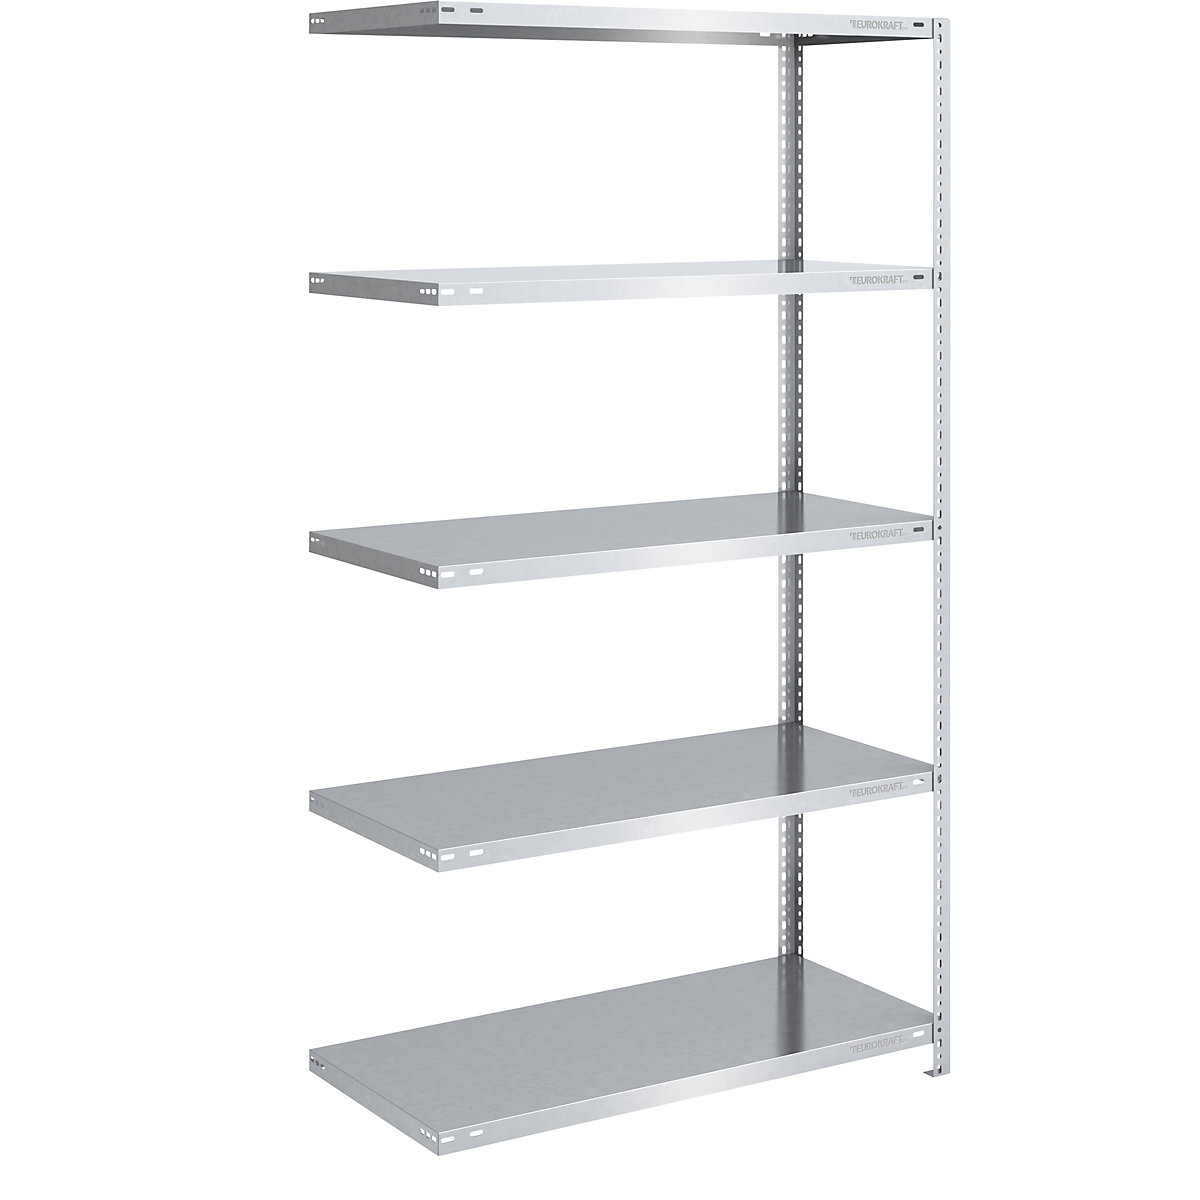 Bolt-together shelf unit, light duty, zinc plated – eurokraft pro, shelf unit height 2000 mm, shelf width 1000 mm, depth 600 mm, extension shelf unit-13